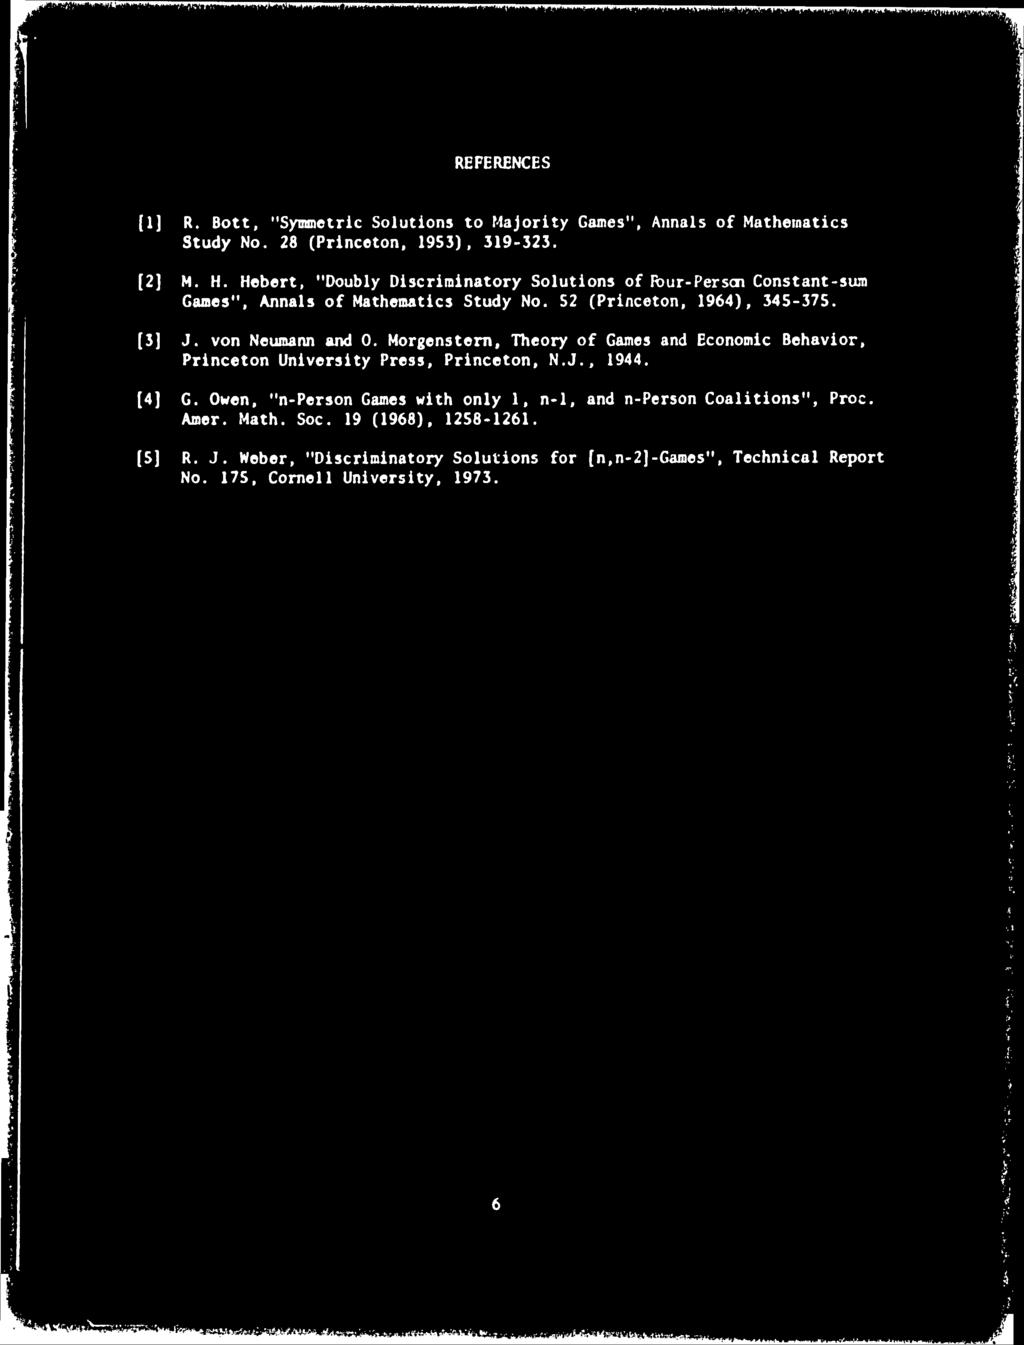 52 (Princeton, 1964), 345-375. [3] J. von Neumann and 0. Morgenstern, Theory of Games and Economic Behavior, Princeton University Press, Princeton, N.J., 1944. [4] G.